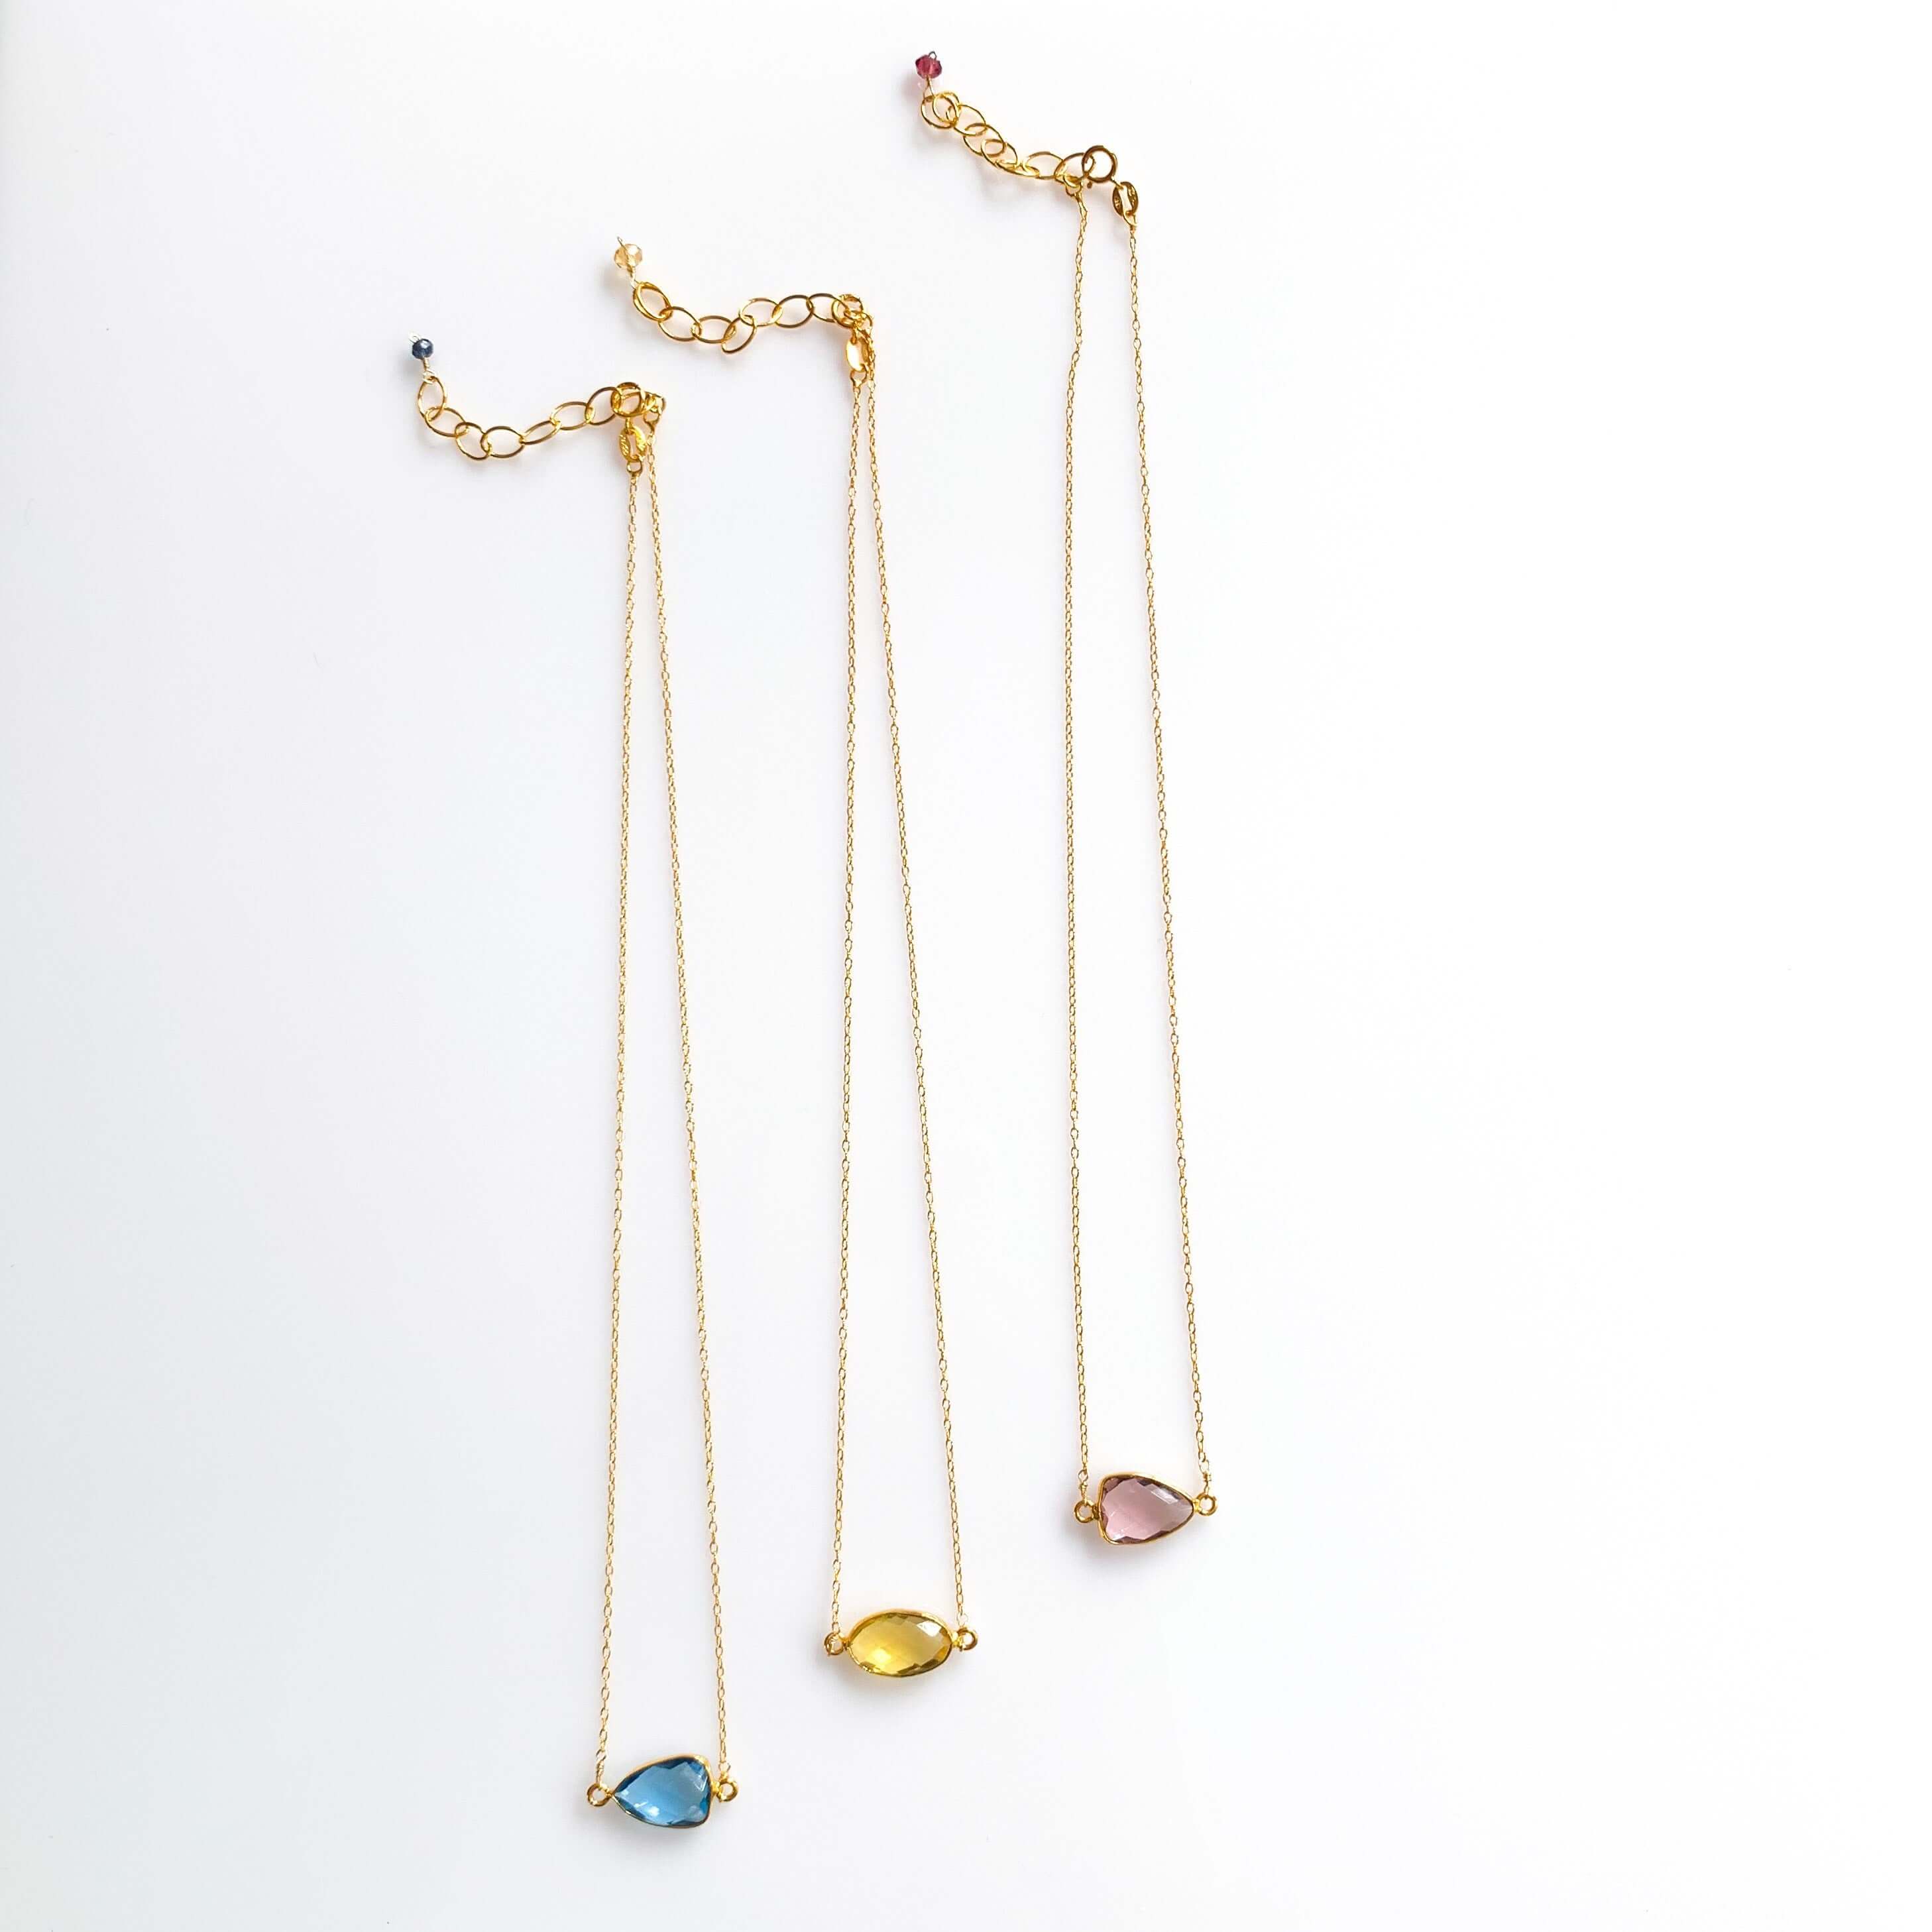 Minimalist Gold Necklaces with Bezel-Set Stones